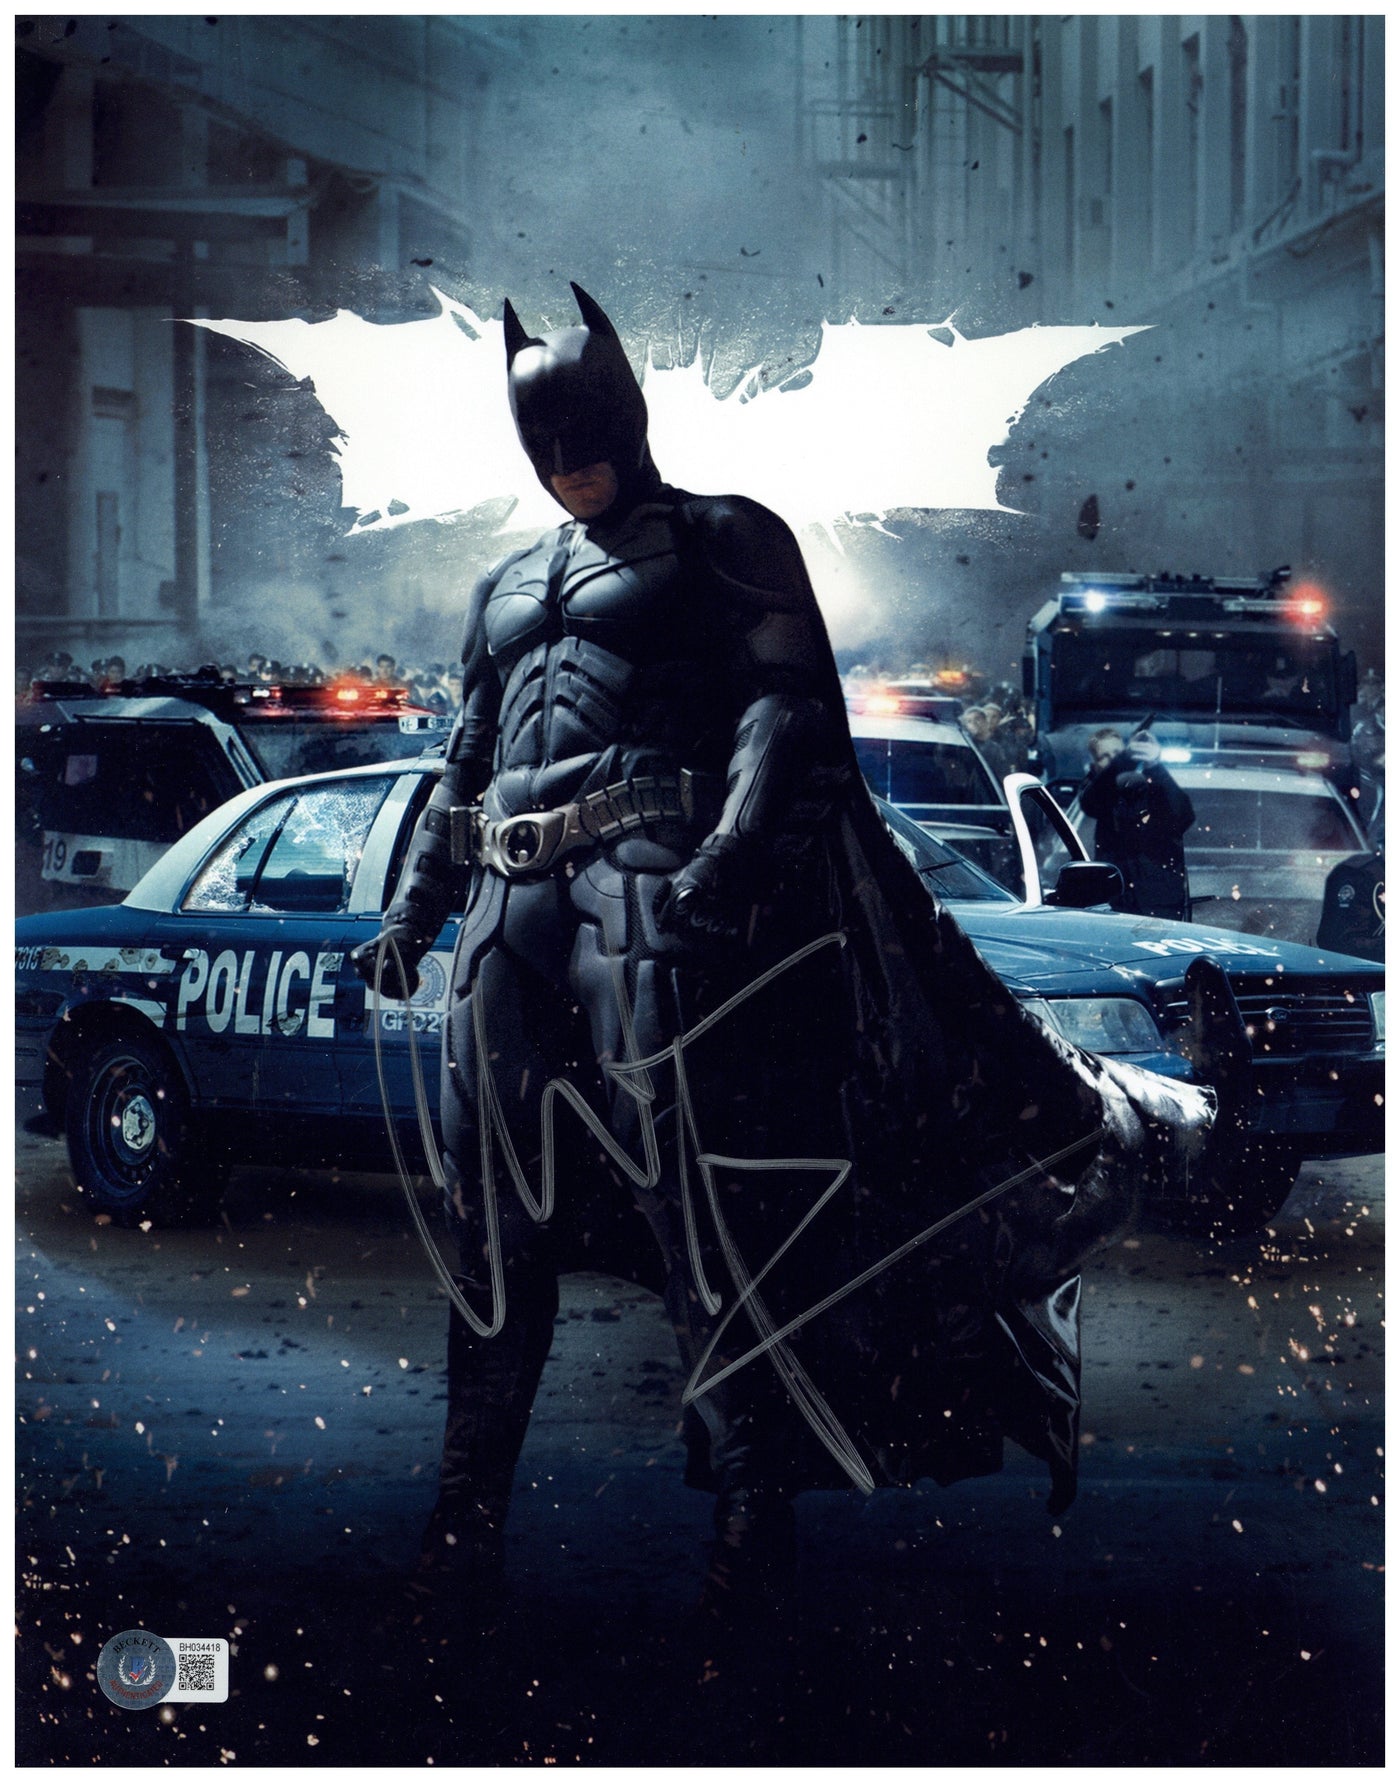 Christian Bale Signed Autograph 11x14 Photo The Dark Knight Batman BAS 2